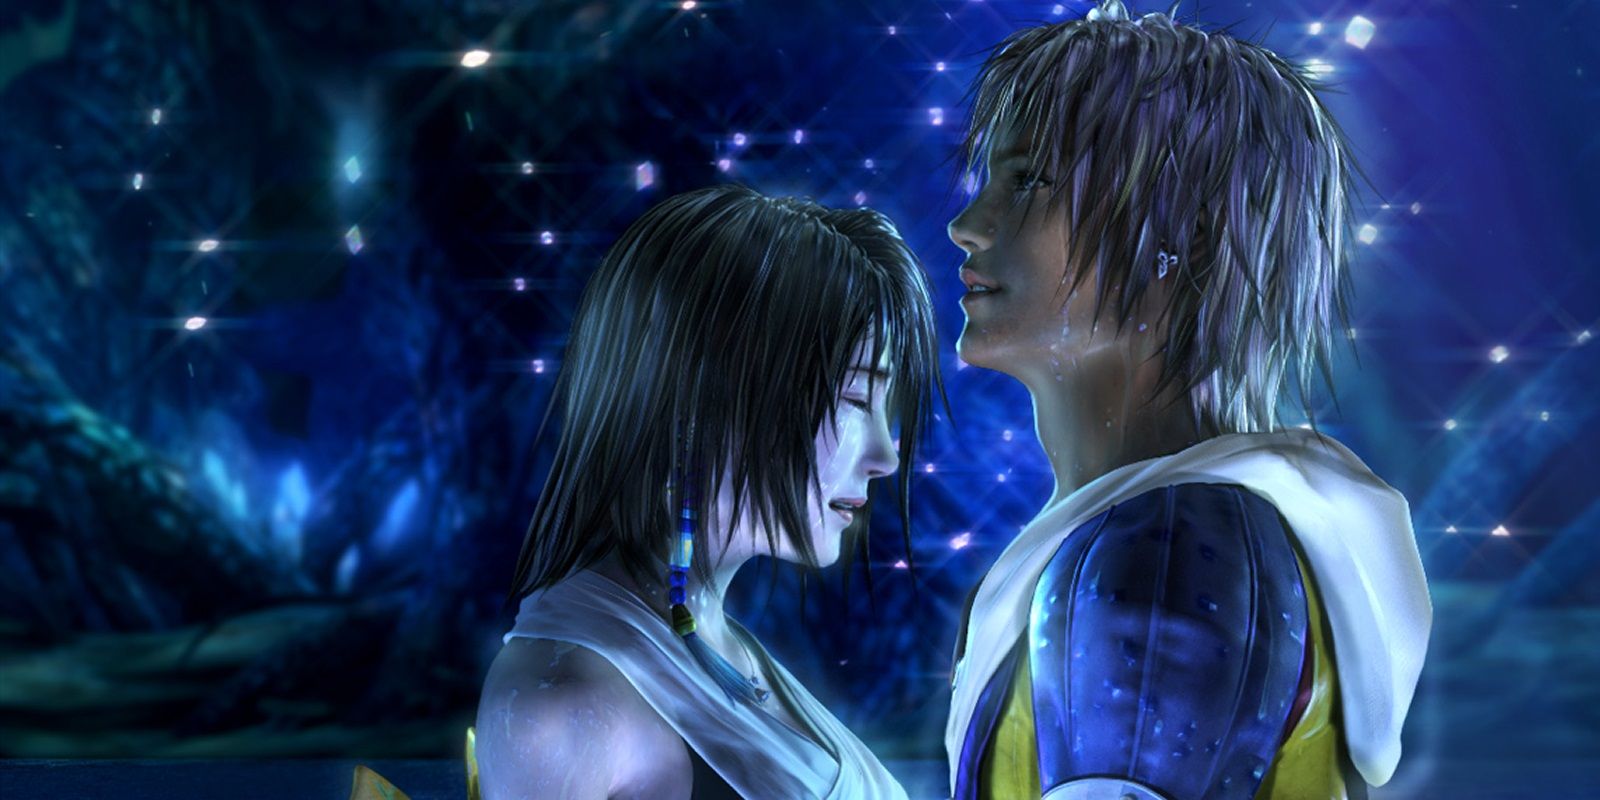 Final Fantasy X, Tidus and Yuna kiss in the lake scene